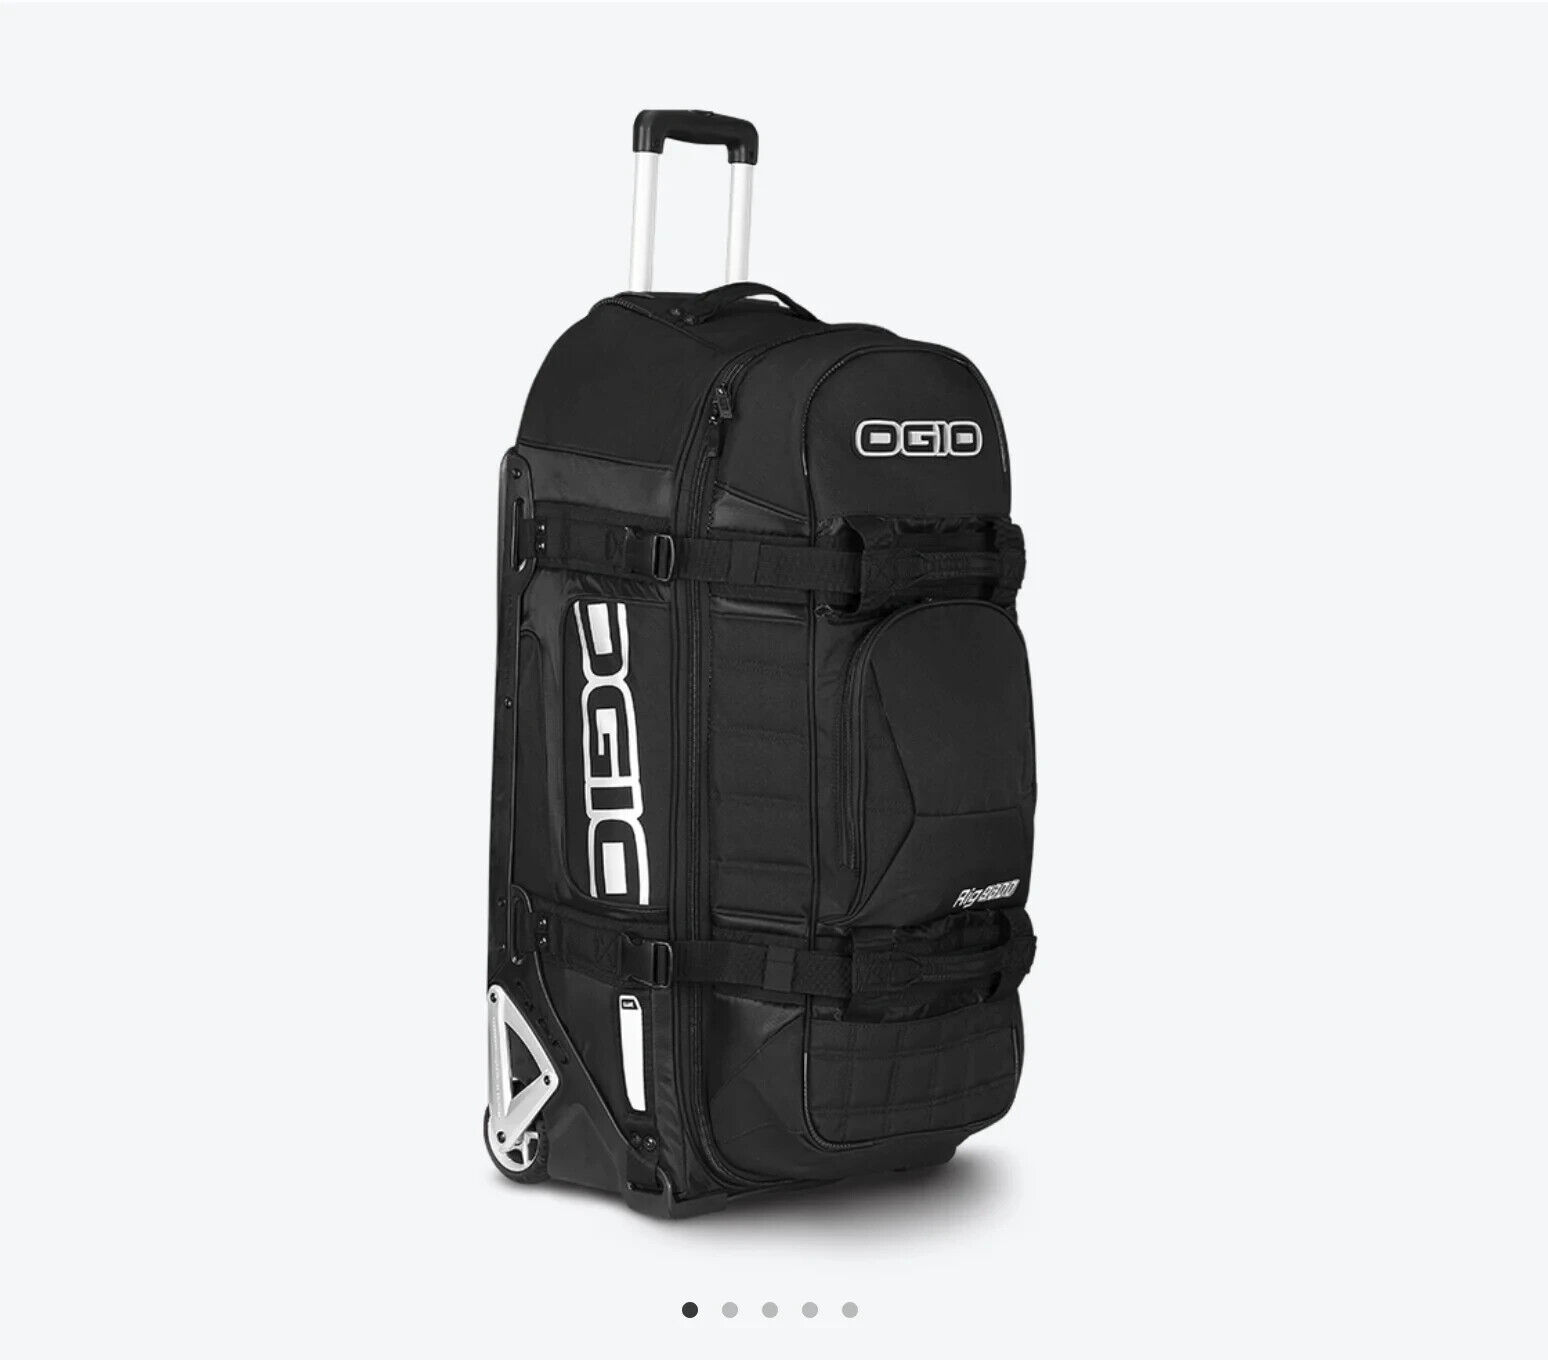 NEW OGIO Rig 9800 Wheeled Rolling Travel Gear Bag Luggage Stealth Black